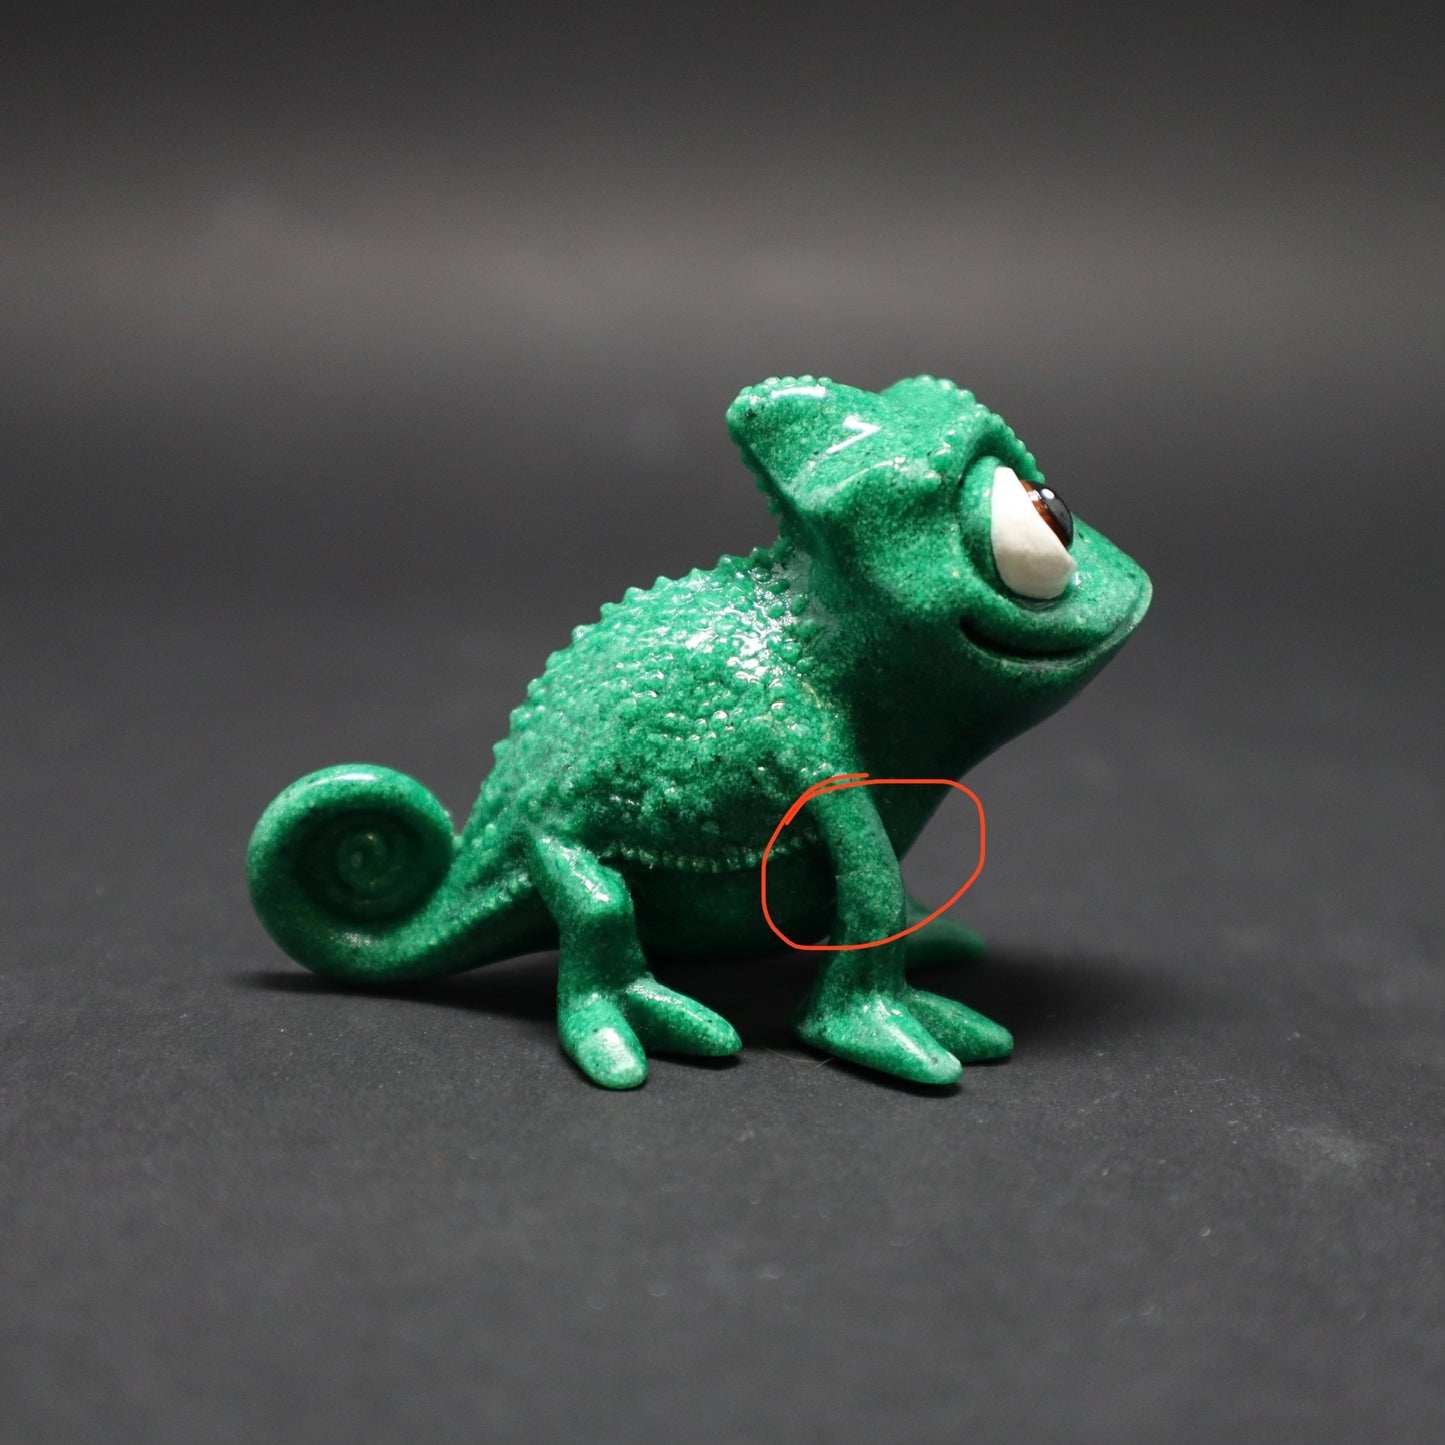 *Repaired* Glow-in-the-Dark Resin Chameleon Sculpture